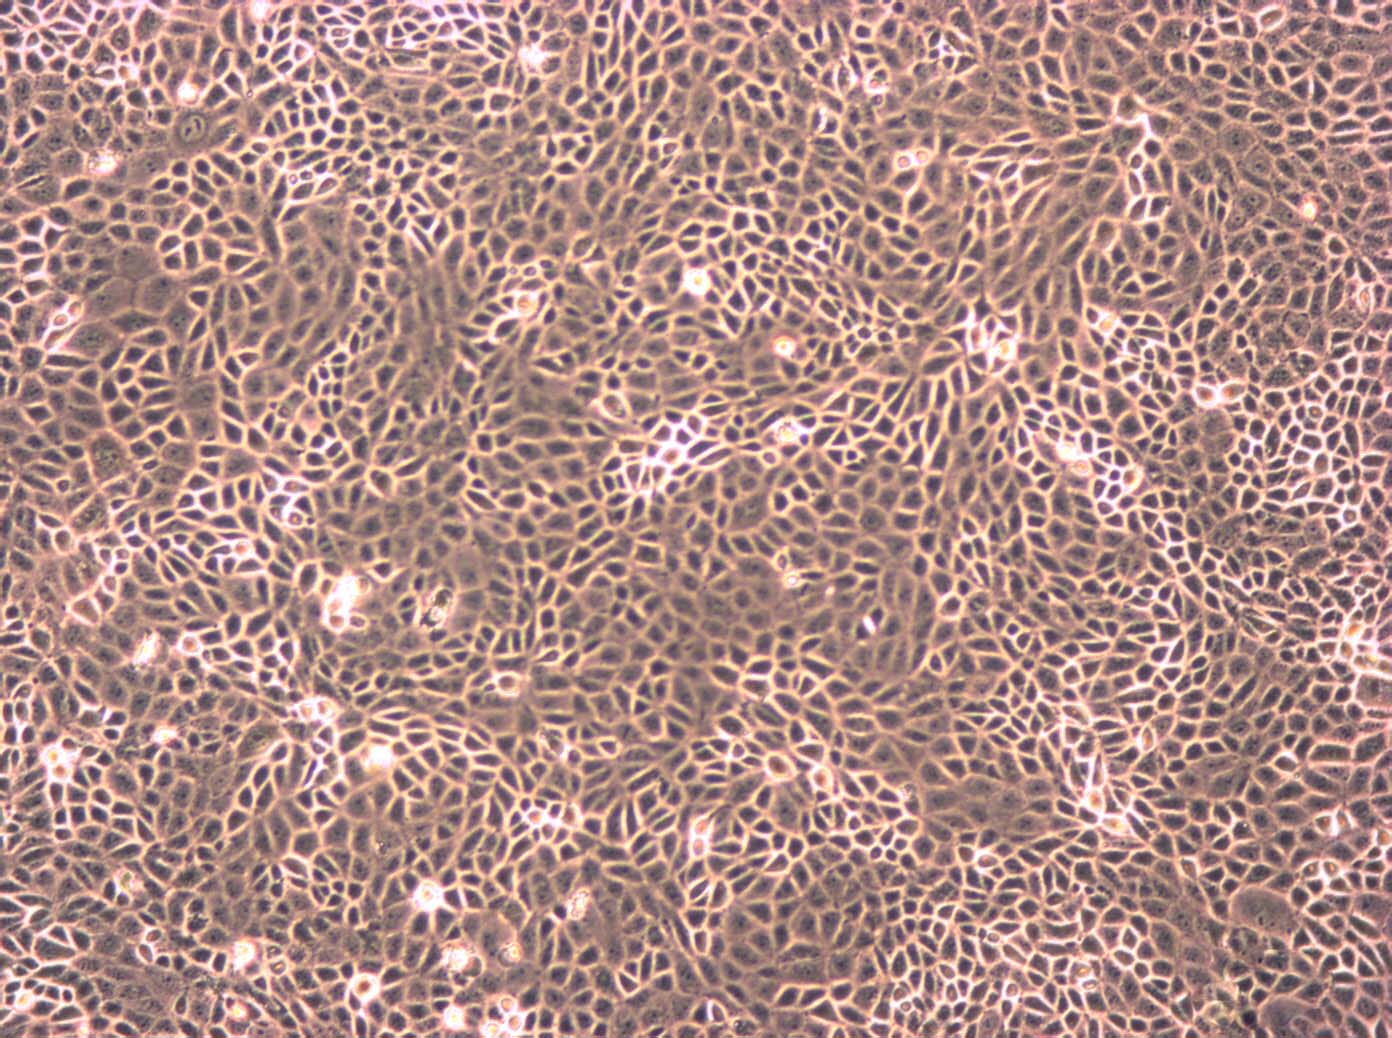 SK-BR-3 Cells|人乳腺腺癌细胞系,SK-BR-3 Cells